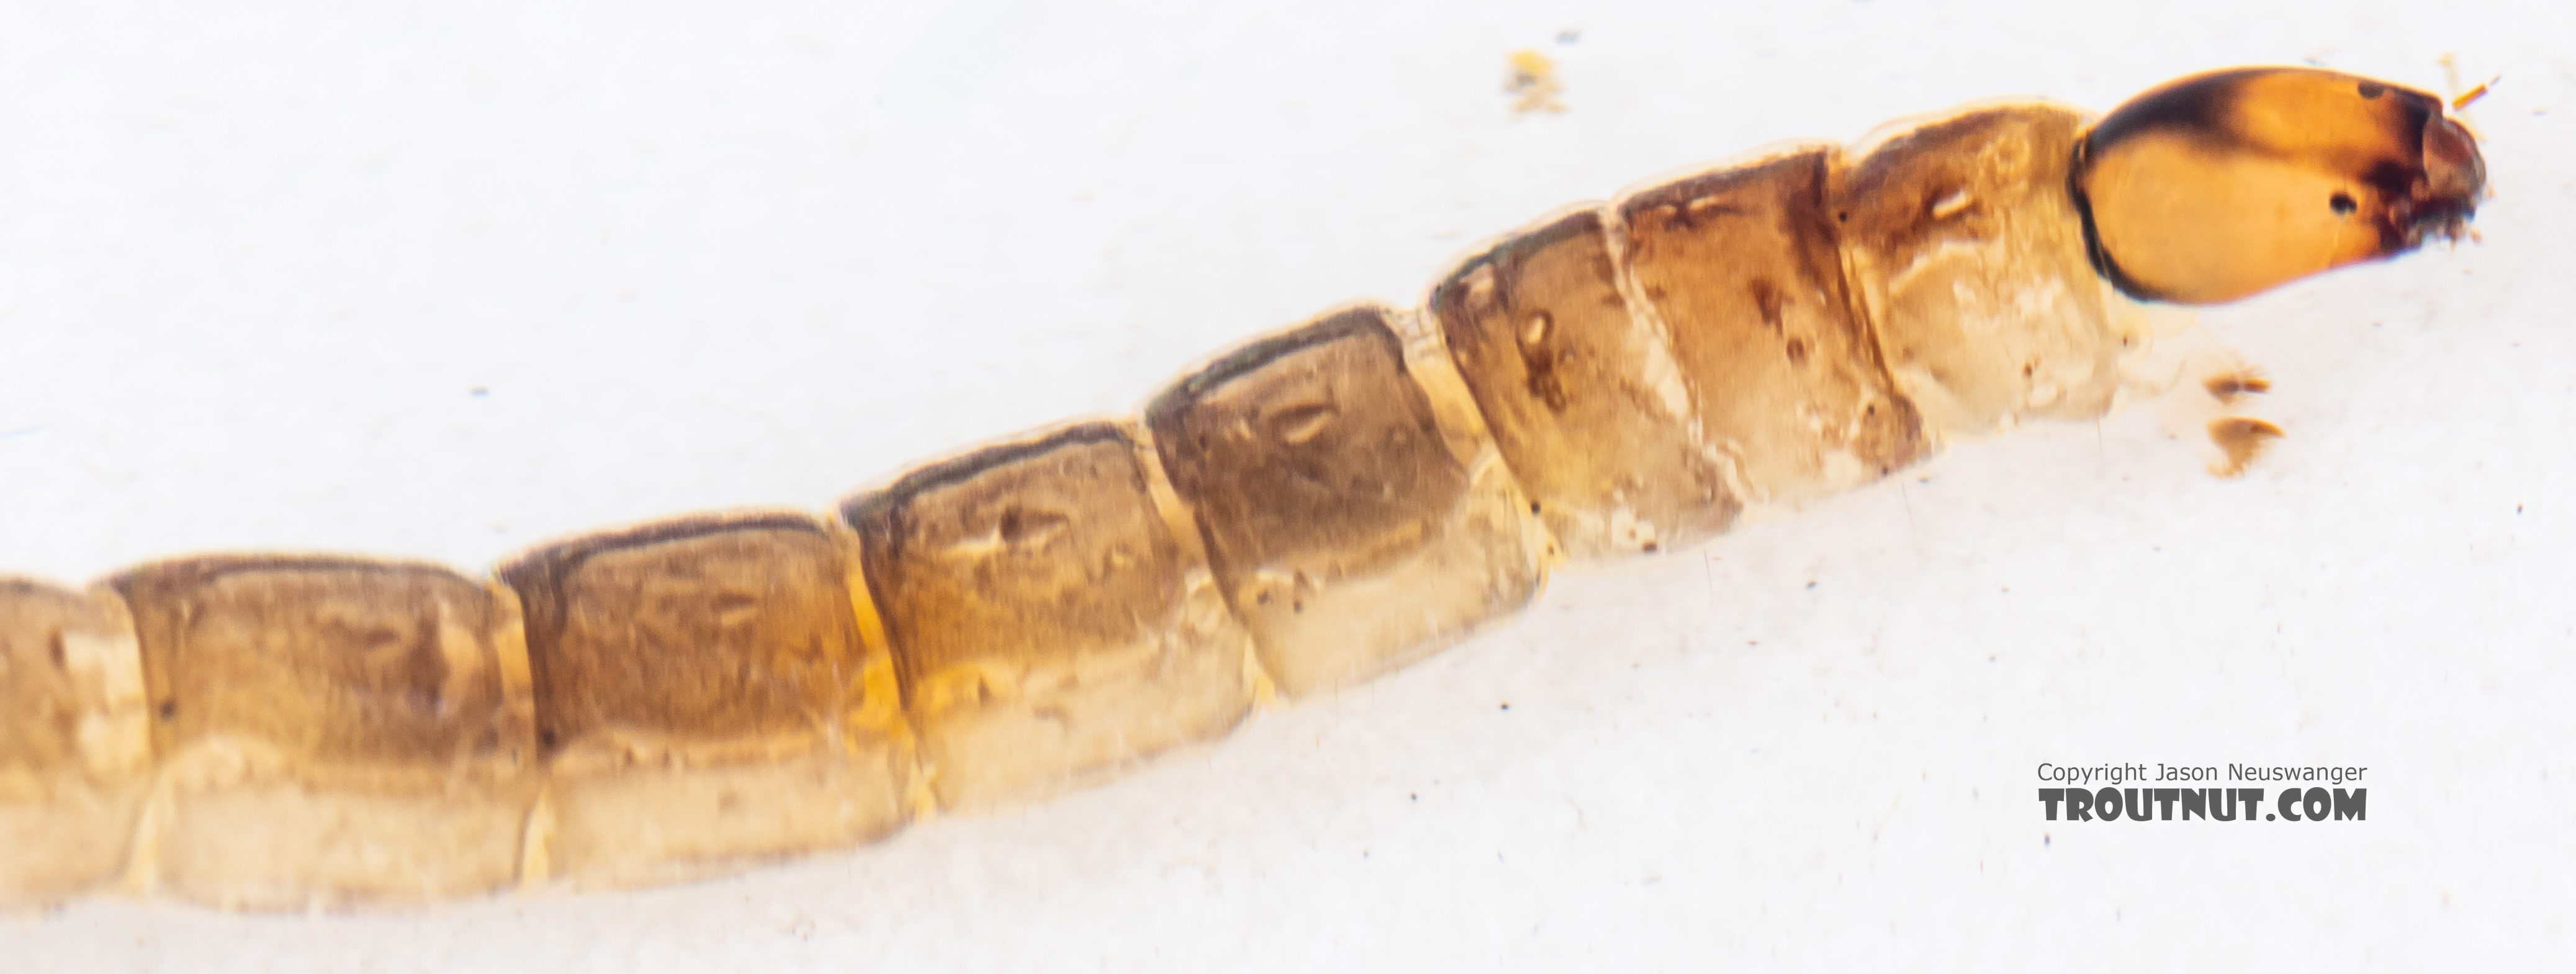 Chironomidae (Midges) Midge Larva from Mystery Creek #199 in Washington